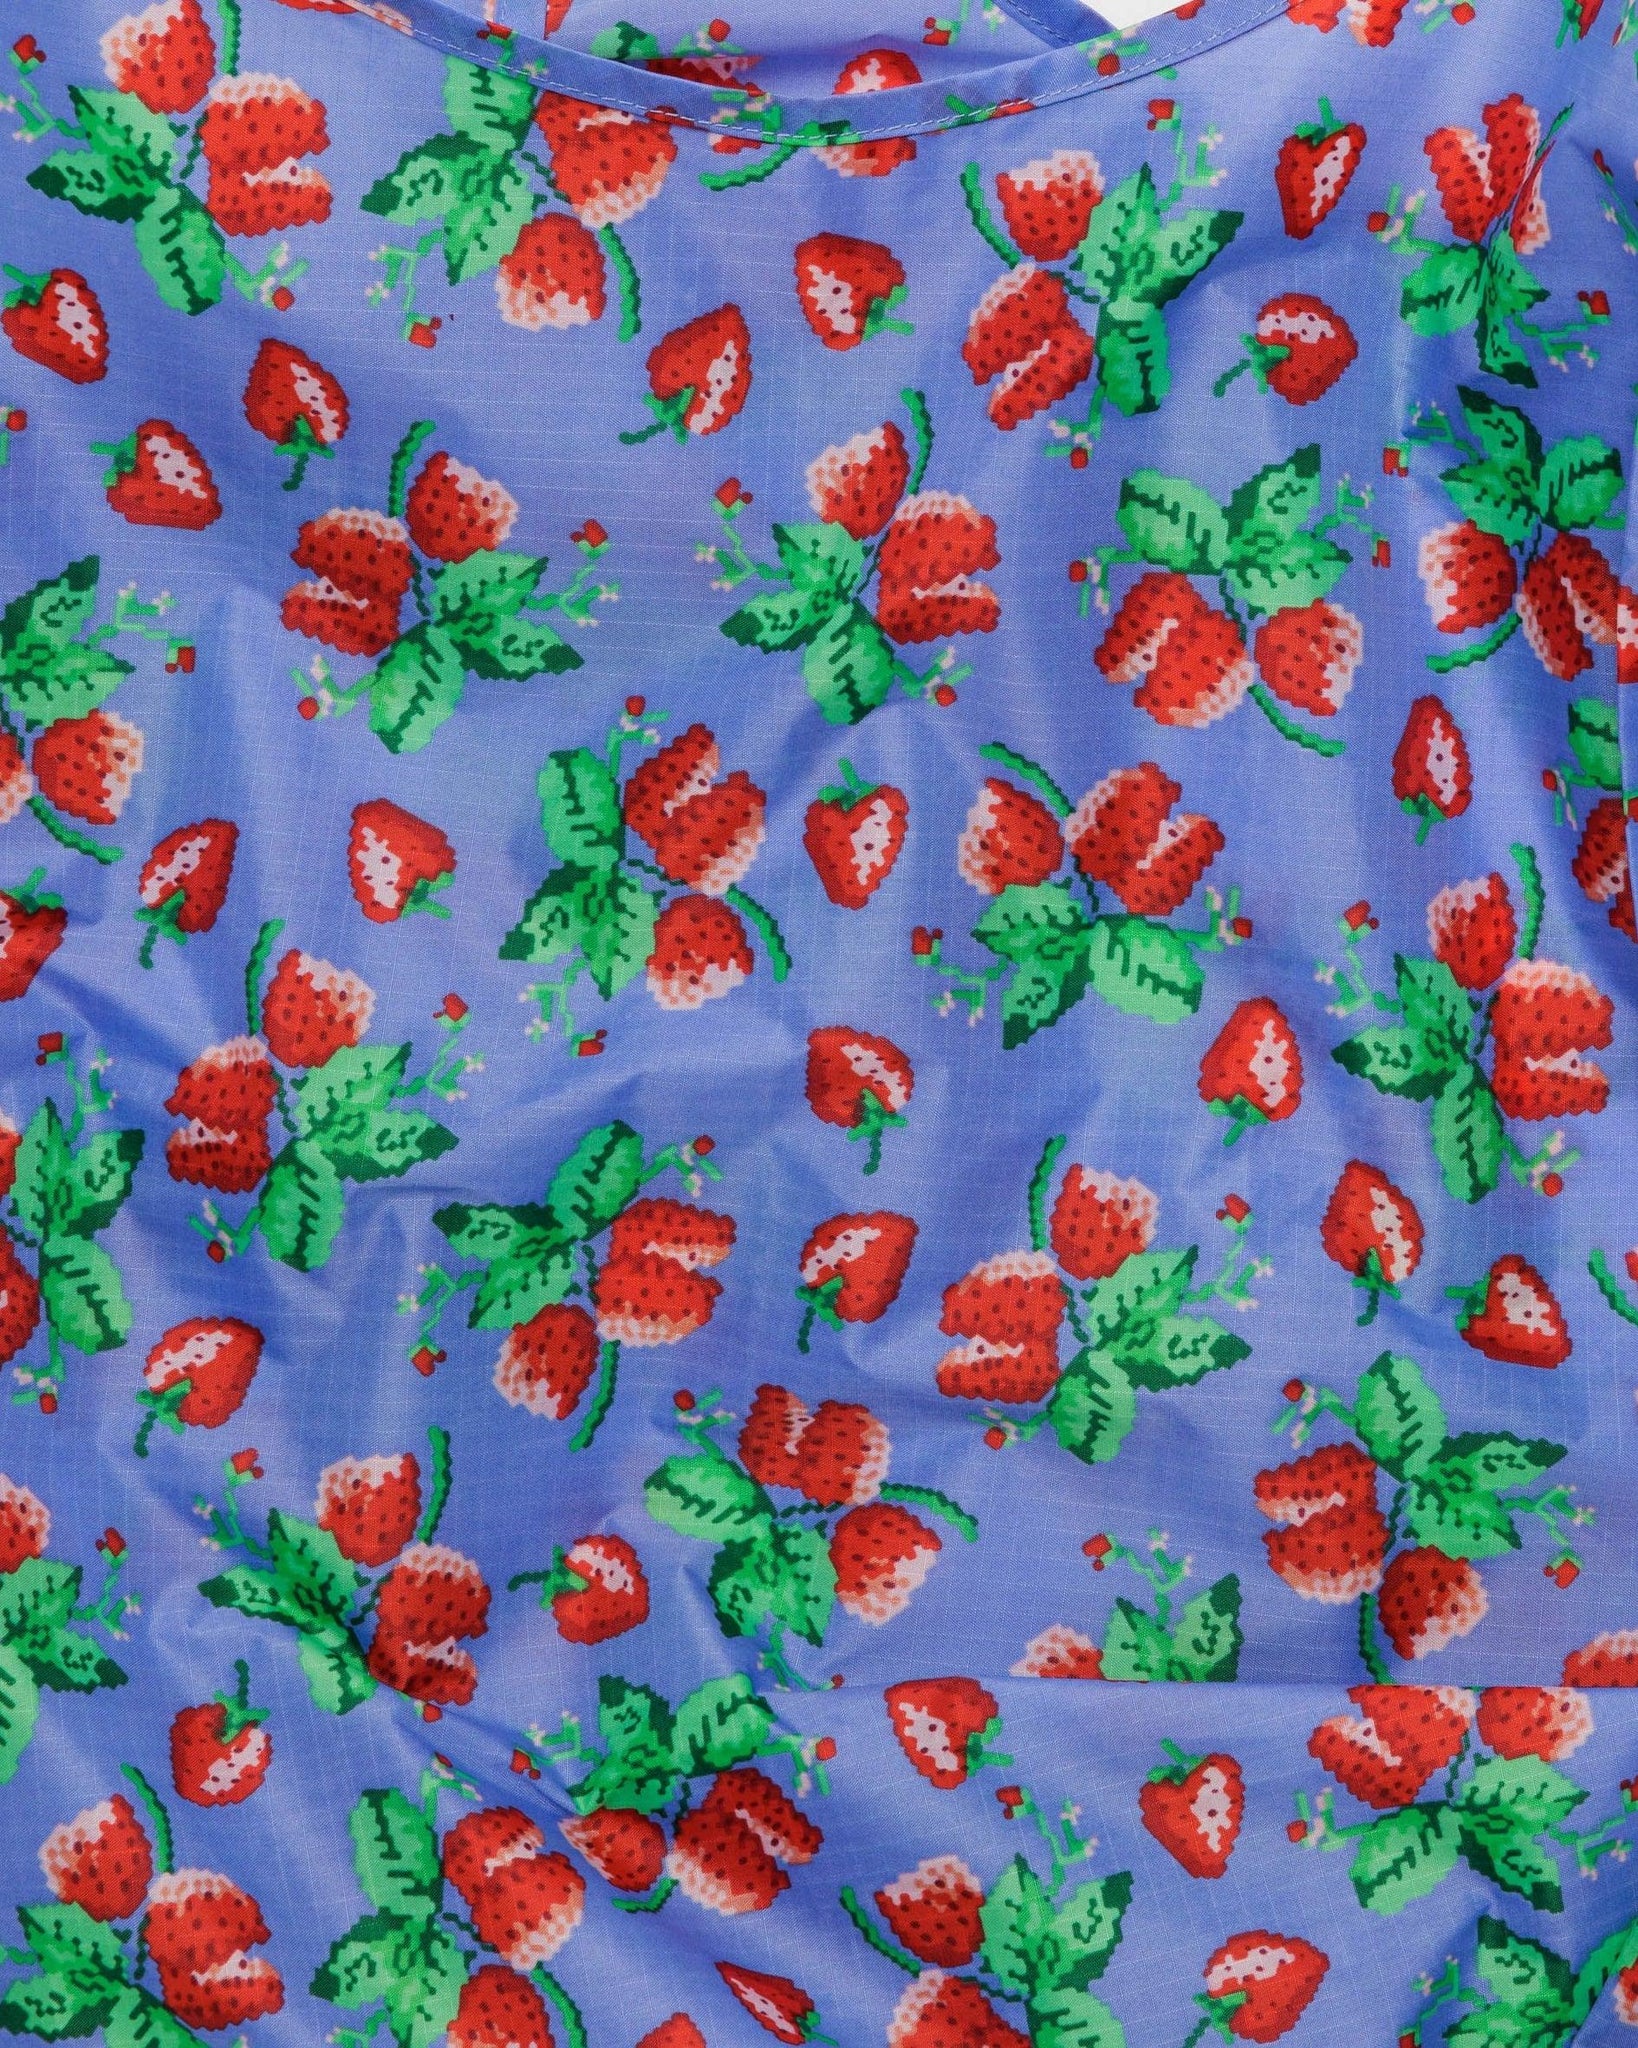 Bolsa Baggu Estándar Reciclada Wild Strawberries - ECRU